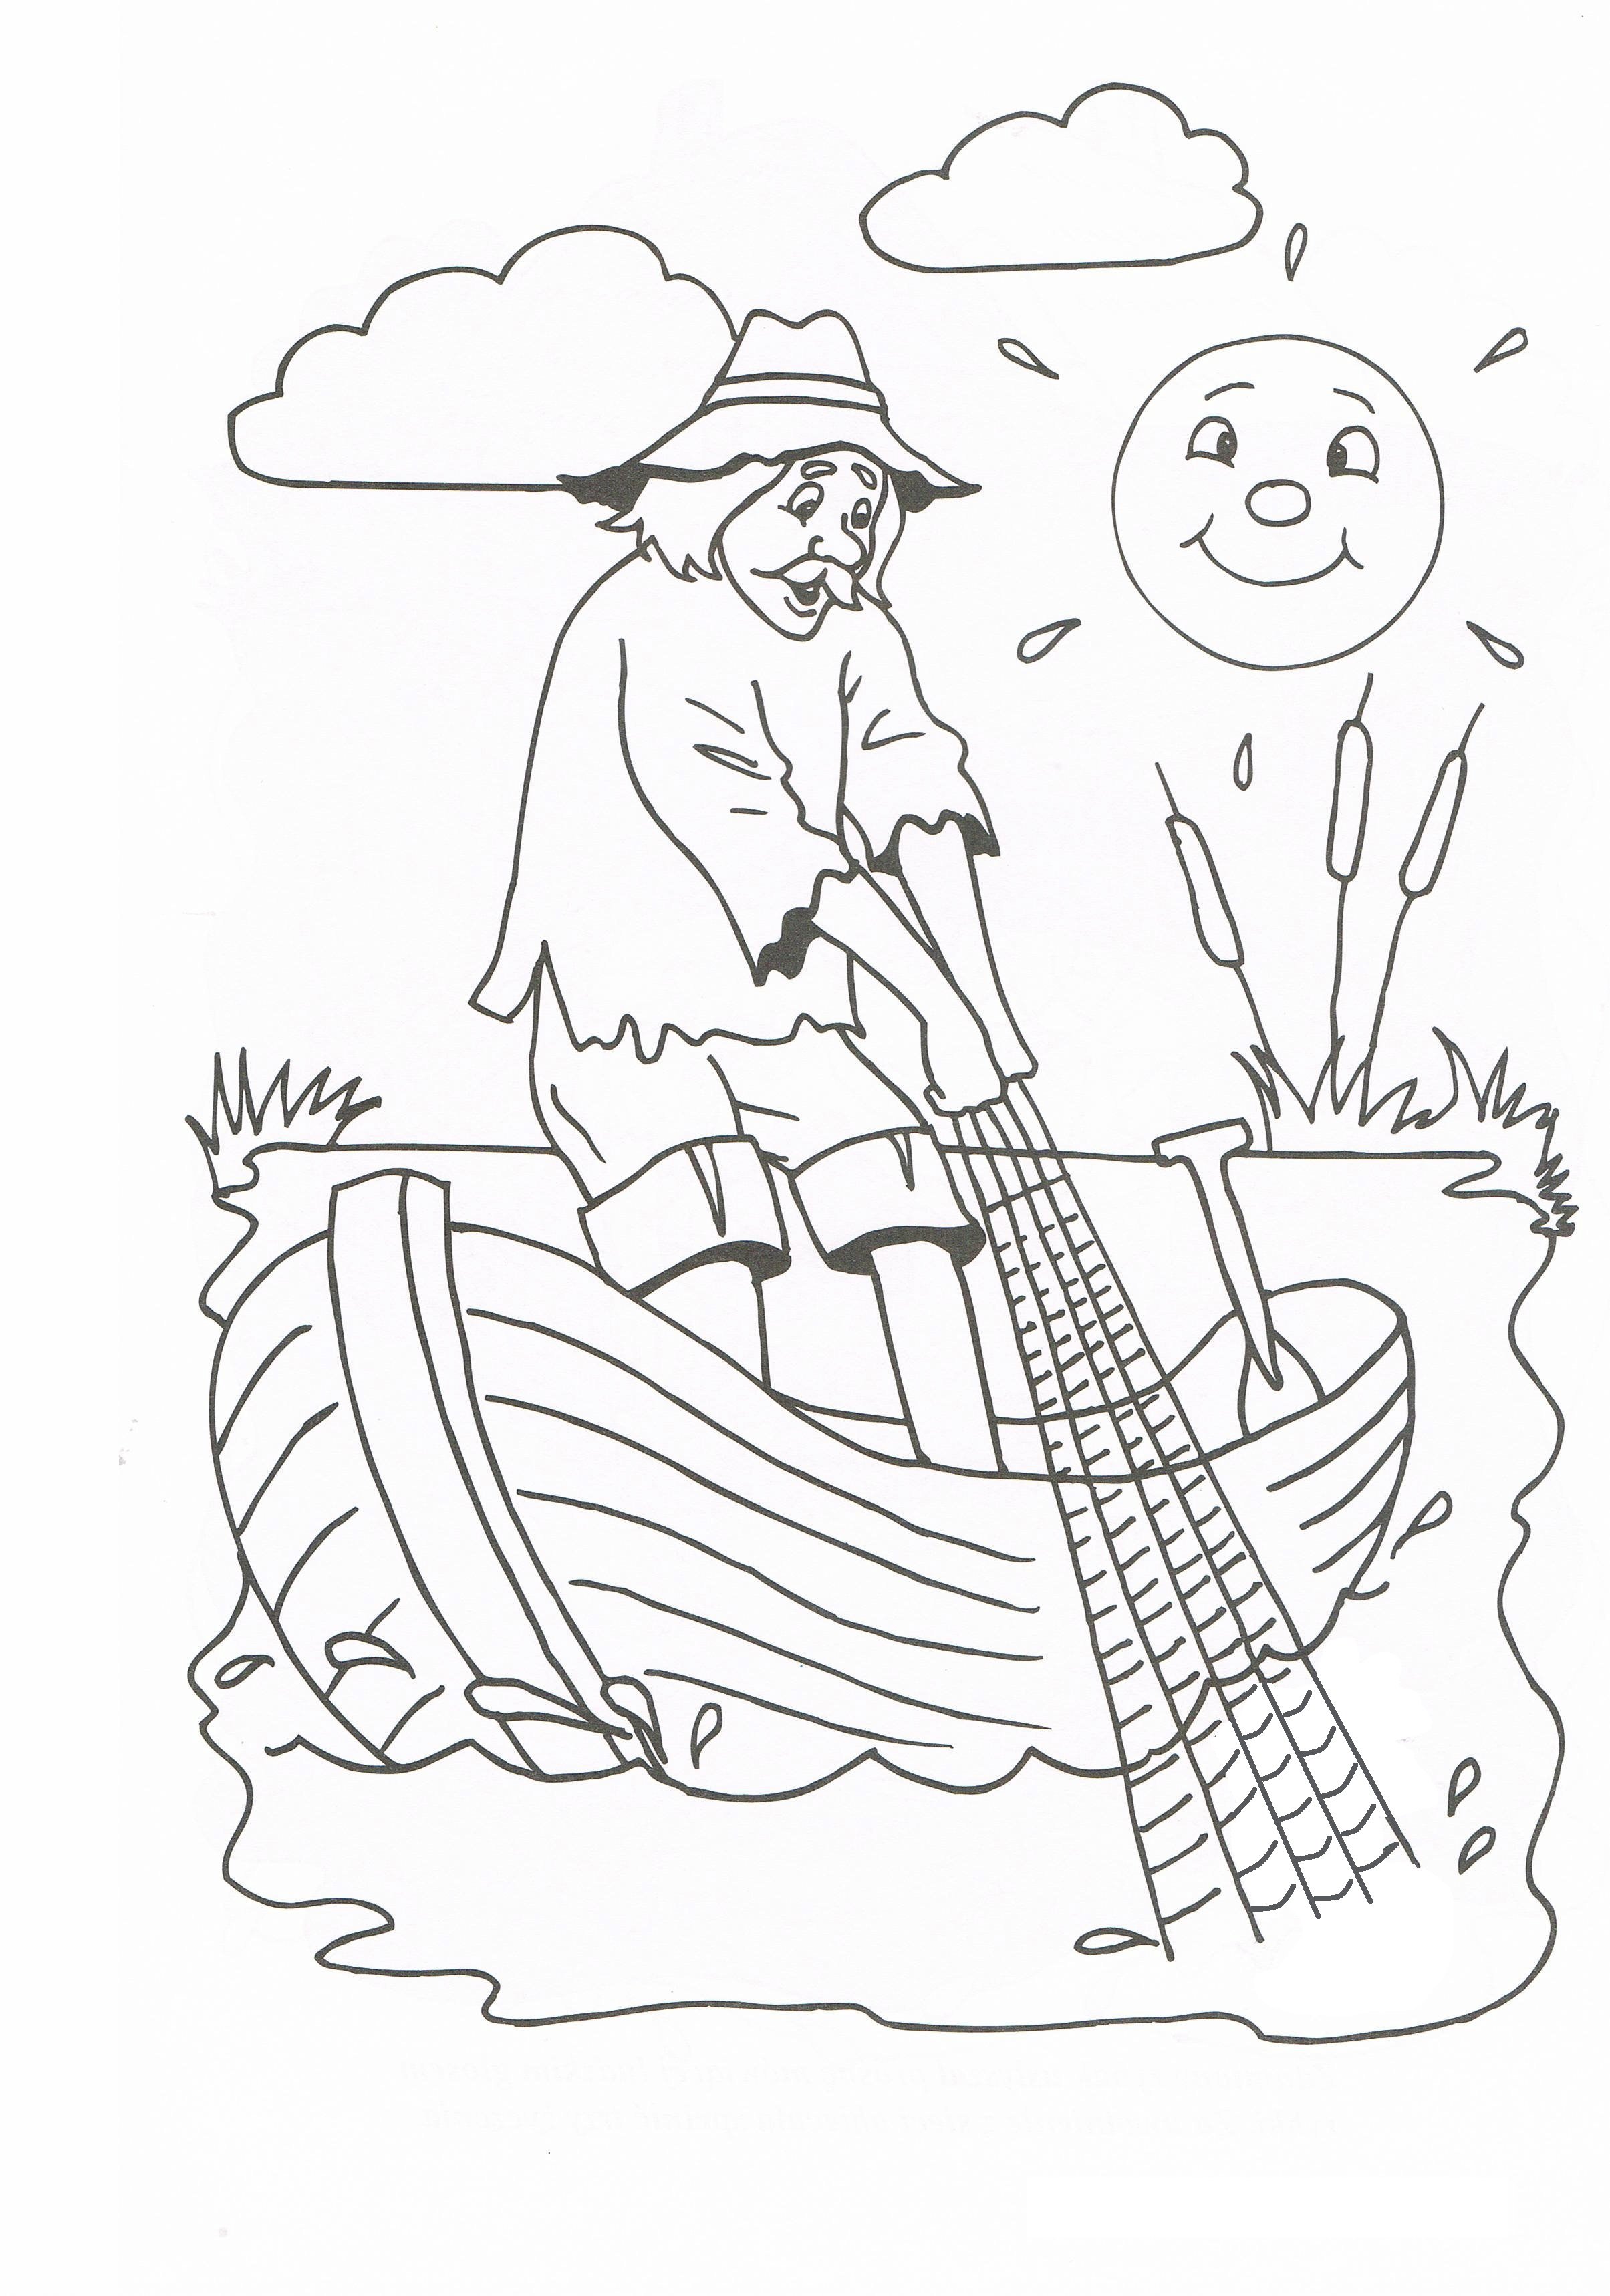 Раскраски к сказке Пушкина о рыбаке и рыбке